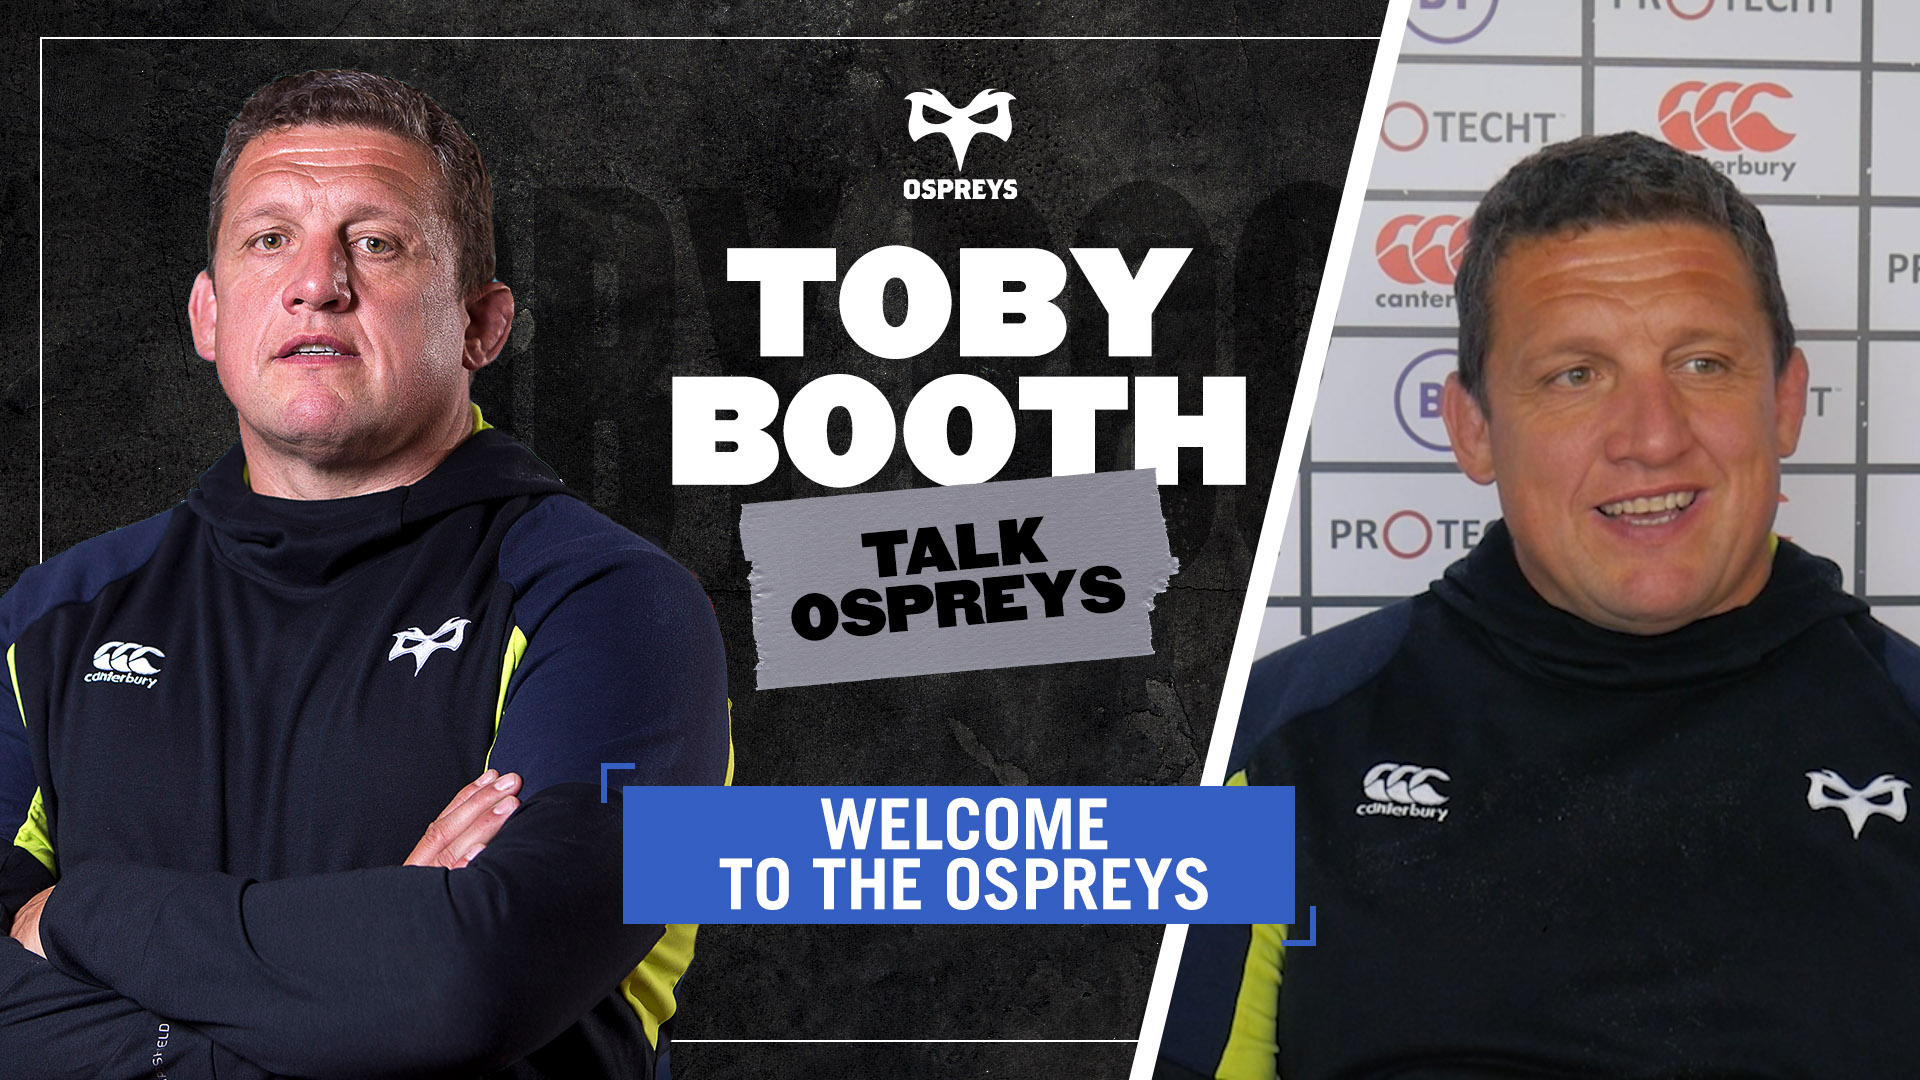 Talk Ospreys Booth 1